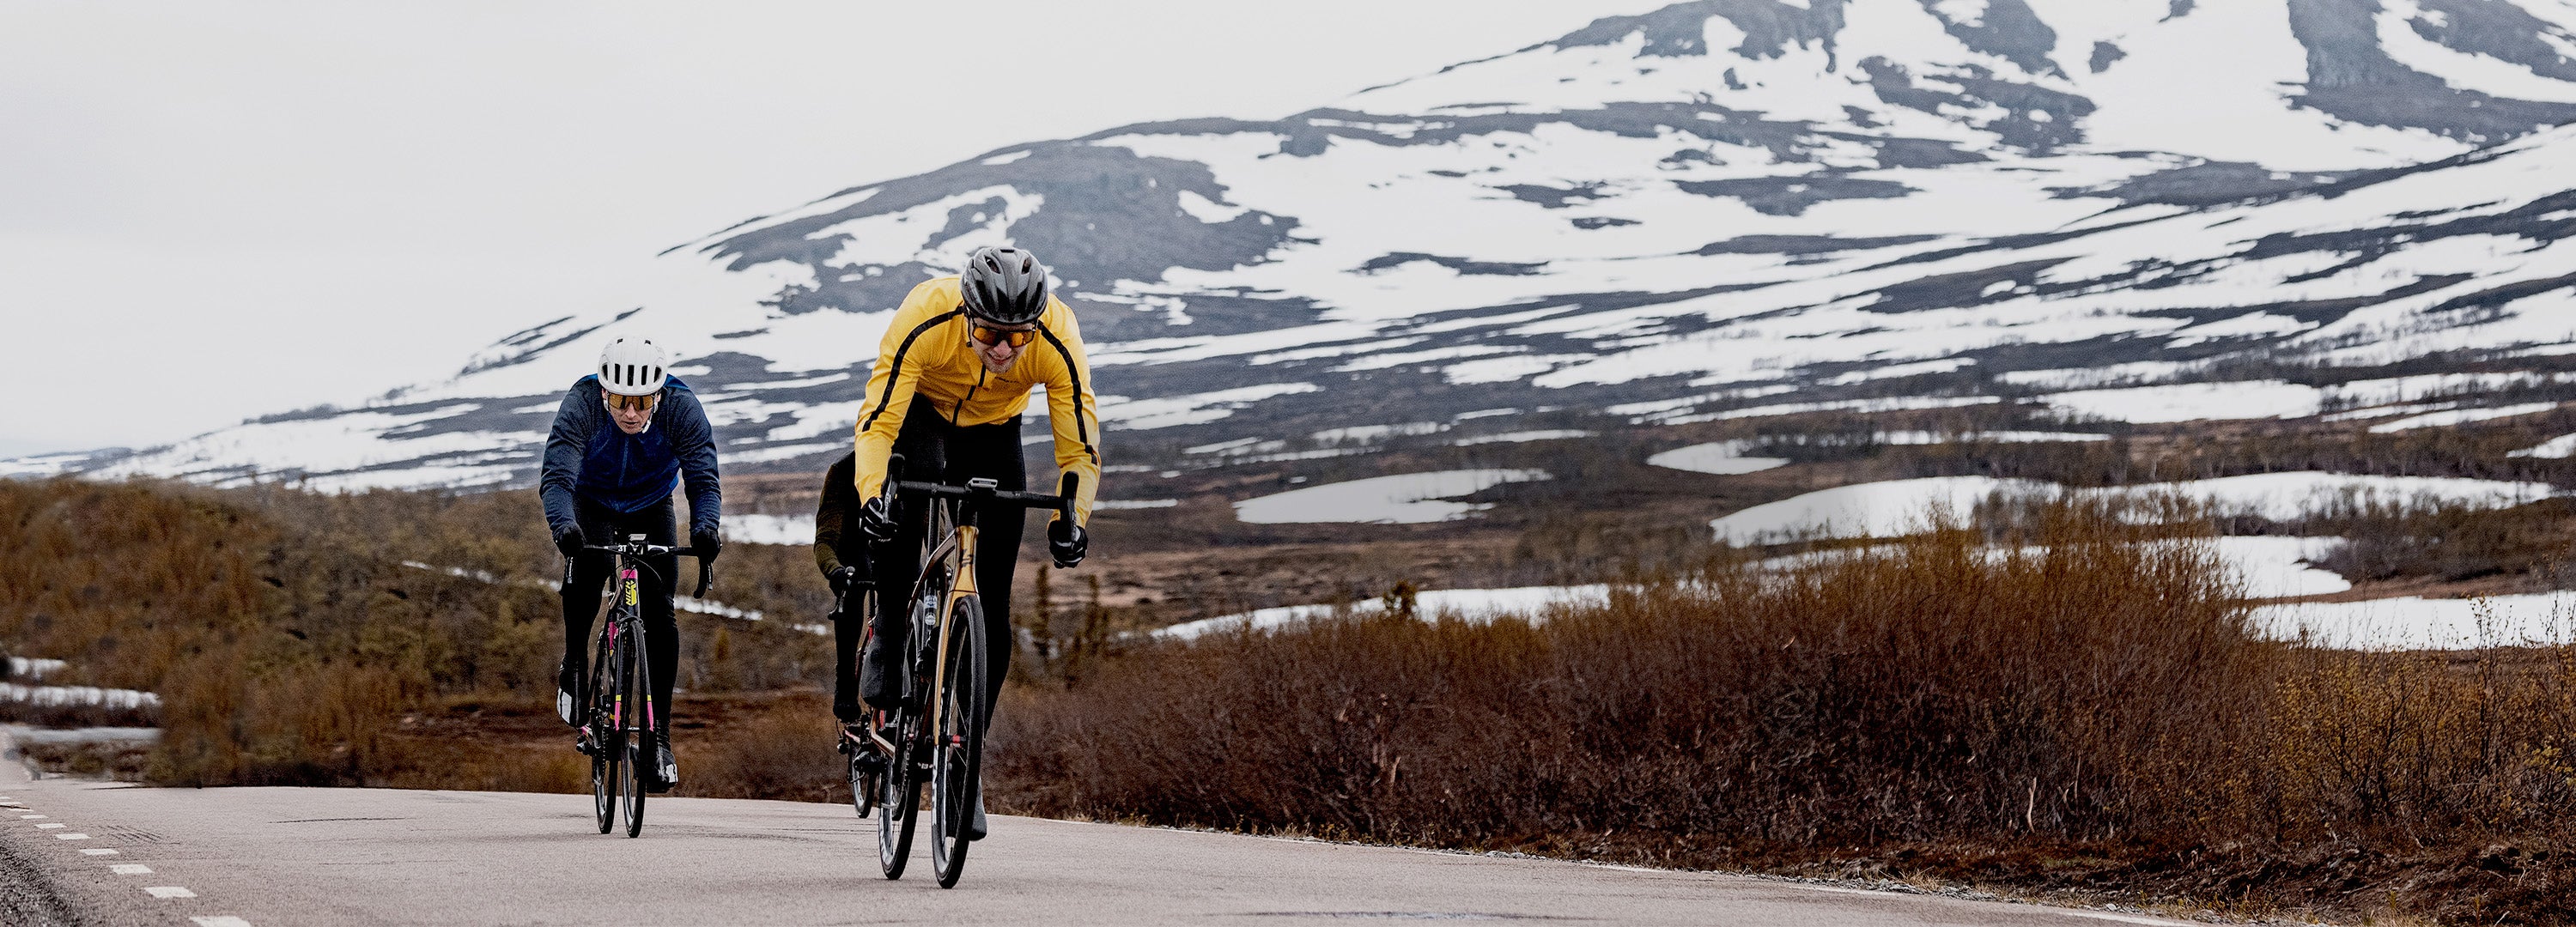 RedWhite Apparel Men's Long Distance Winter Cycling Bib Tights